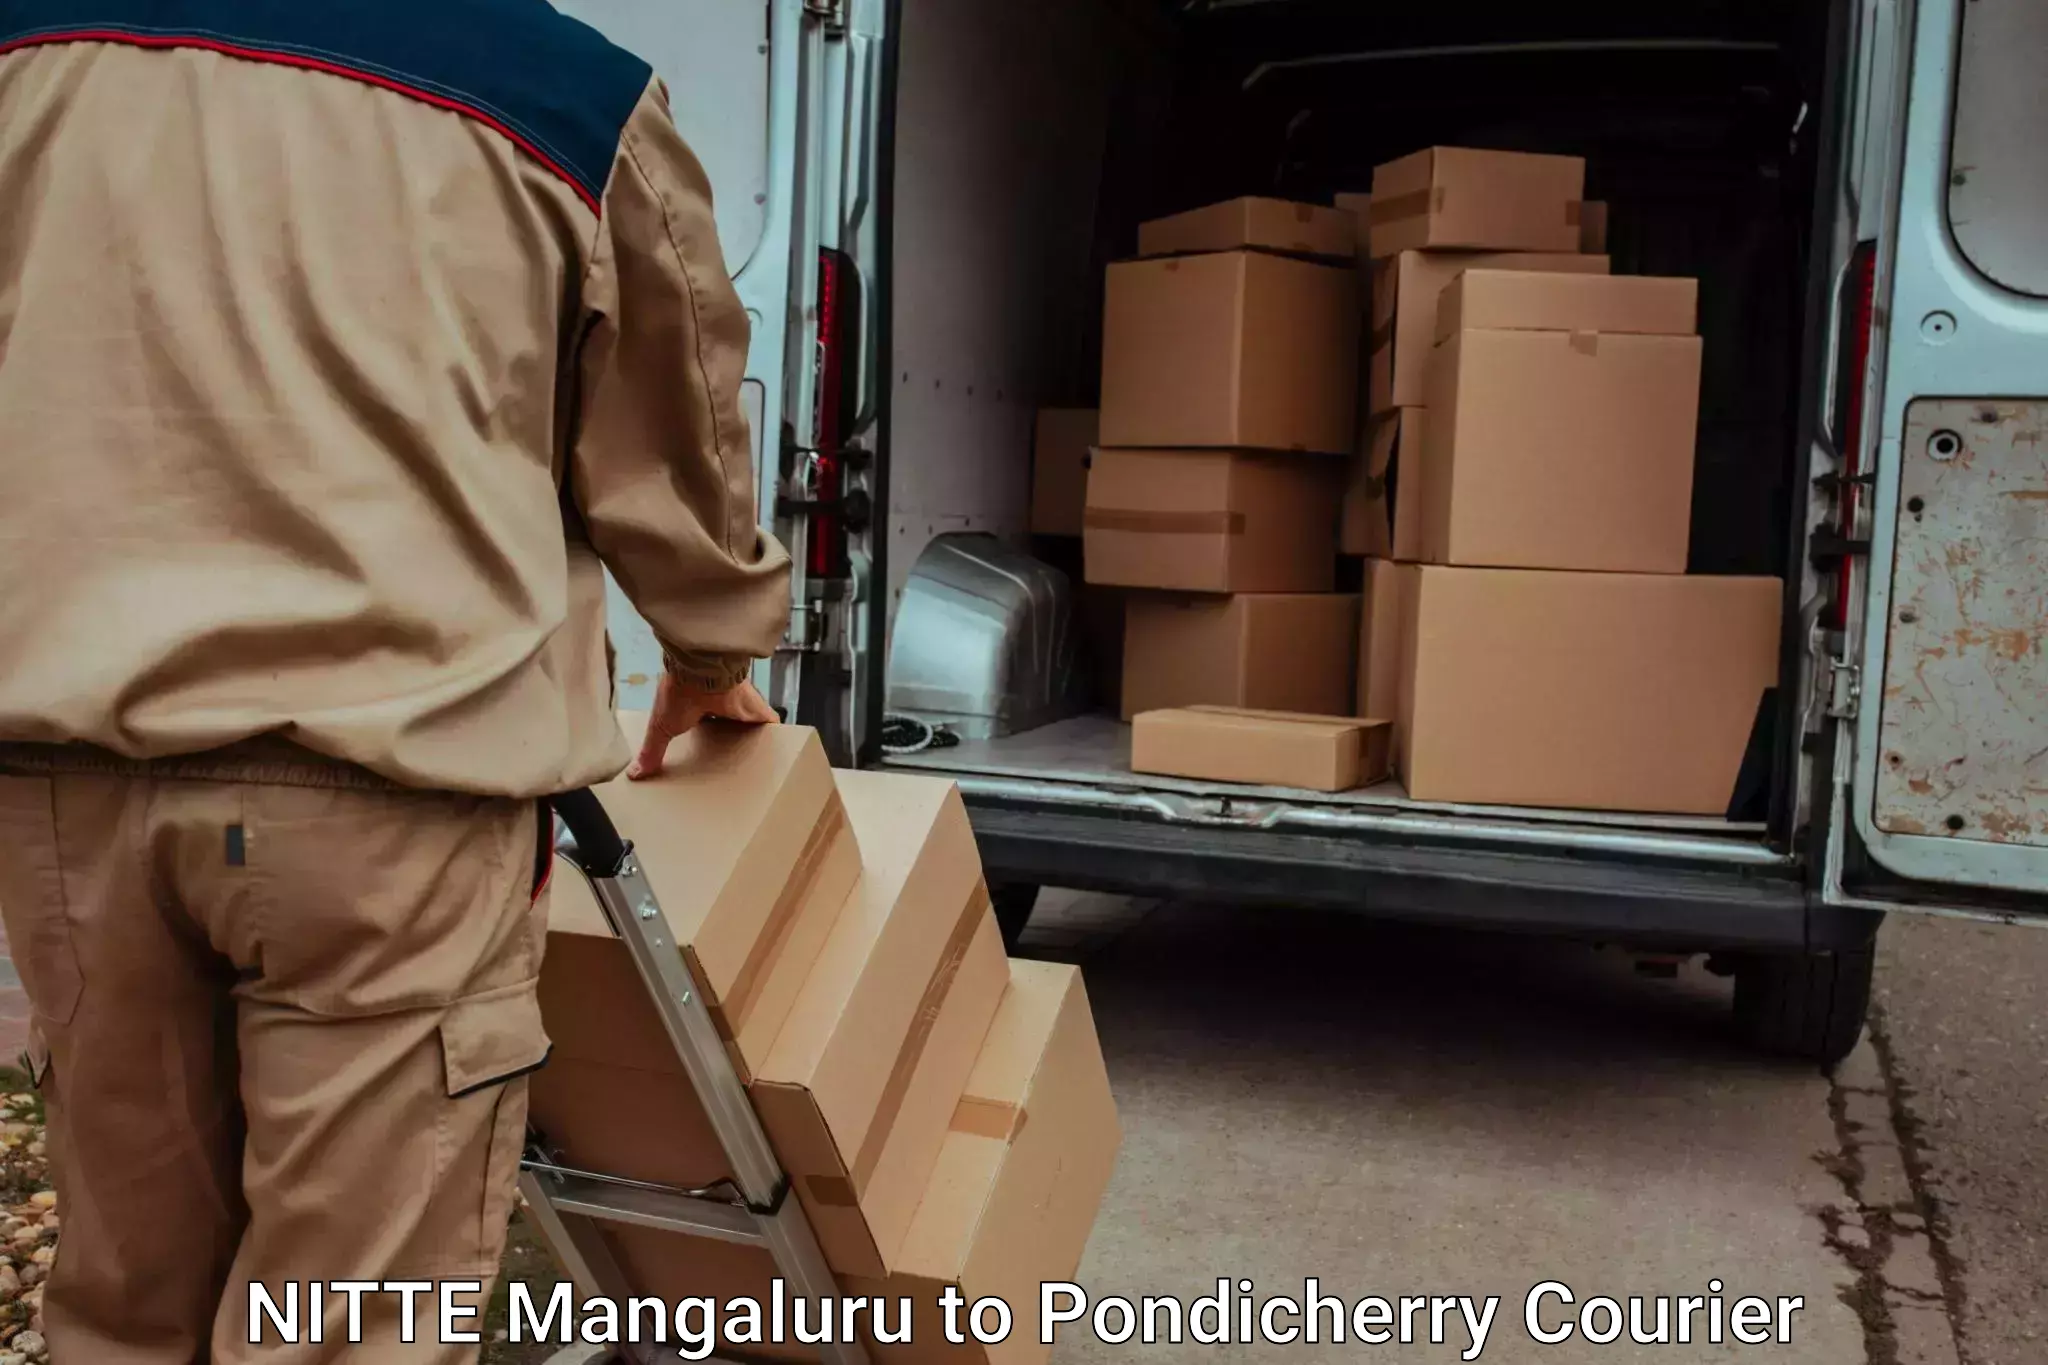 Furniture transport specialists NITTE Mangaluru to Pondicherry